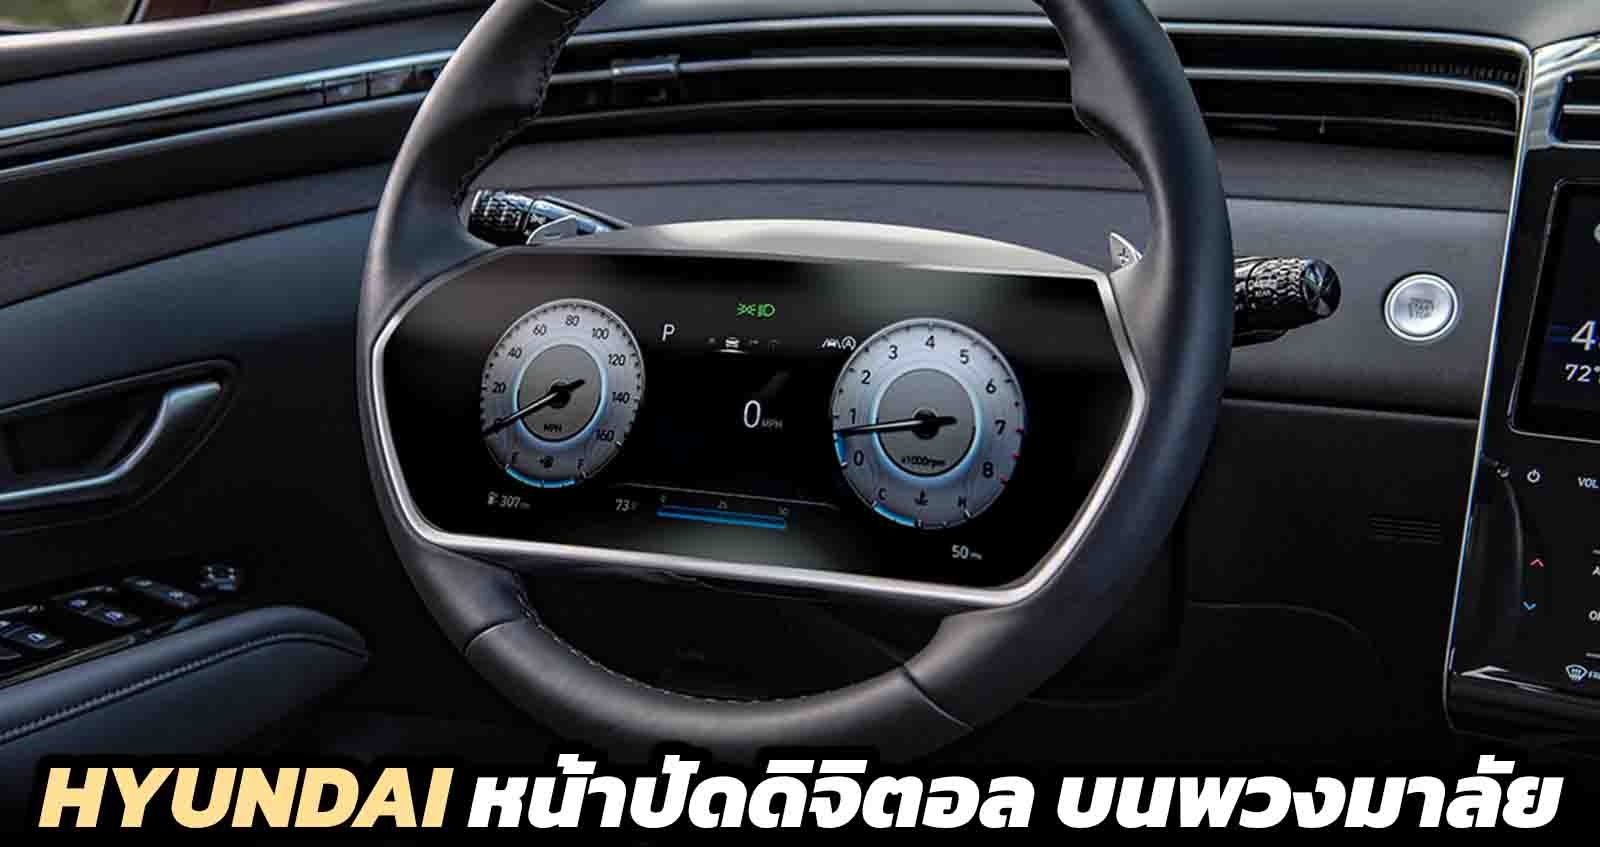 Hyundai จดสิทธิบัตร หน้าปัดดิจิตอล บนพวงมาลัย